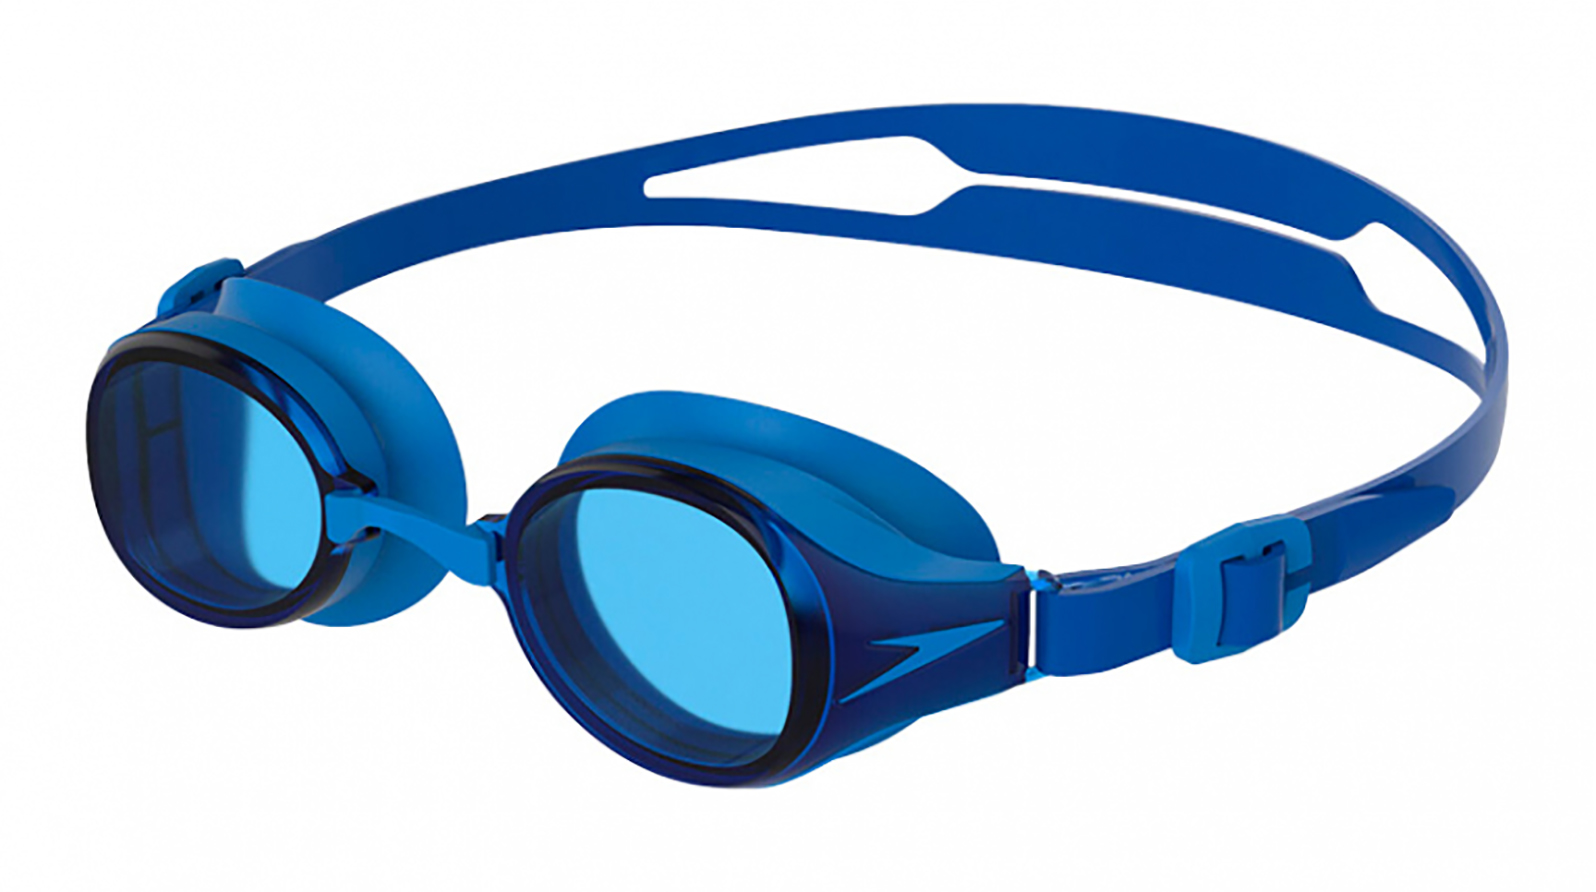 Speedo Очки для плавания Hydropure Optical F809 -4.5 speedo очки для плавания hydropure optical f809 4 0